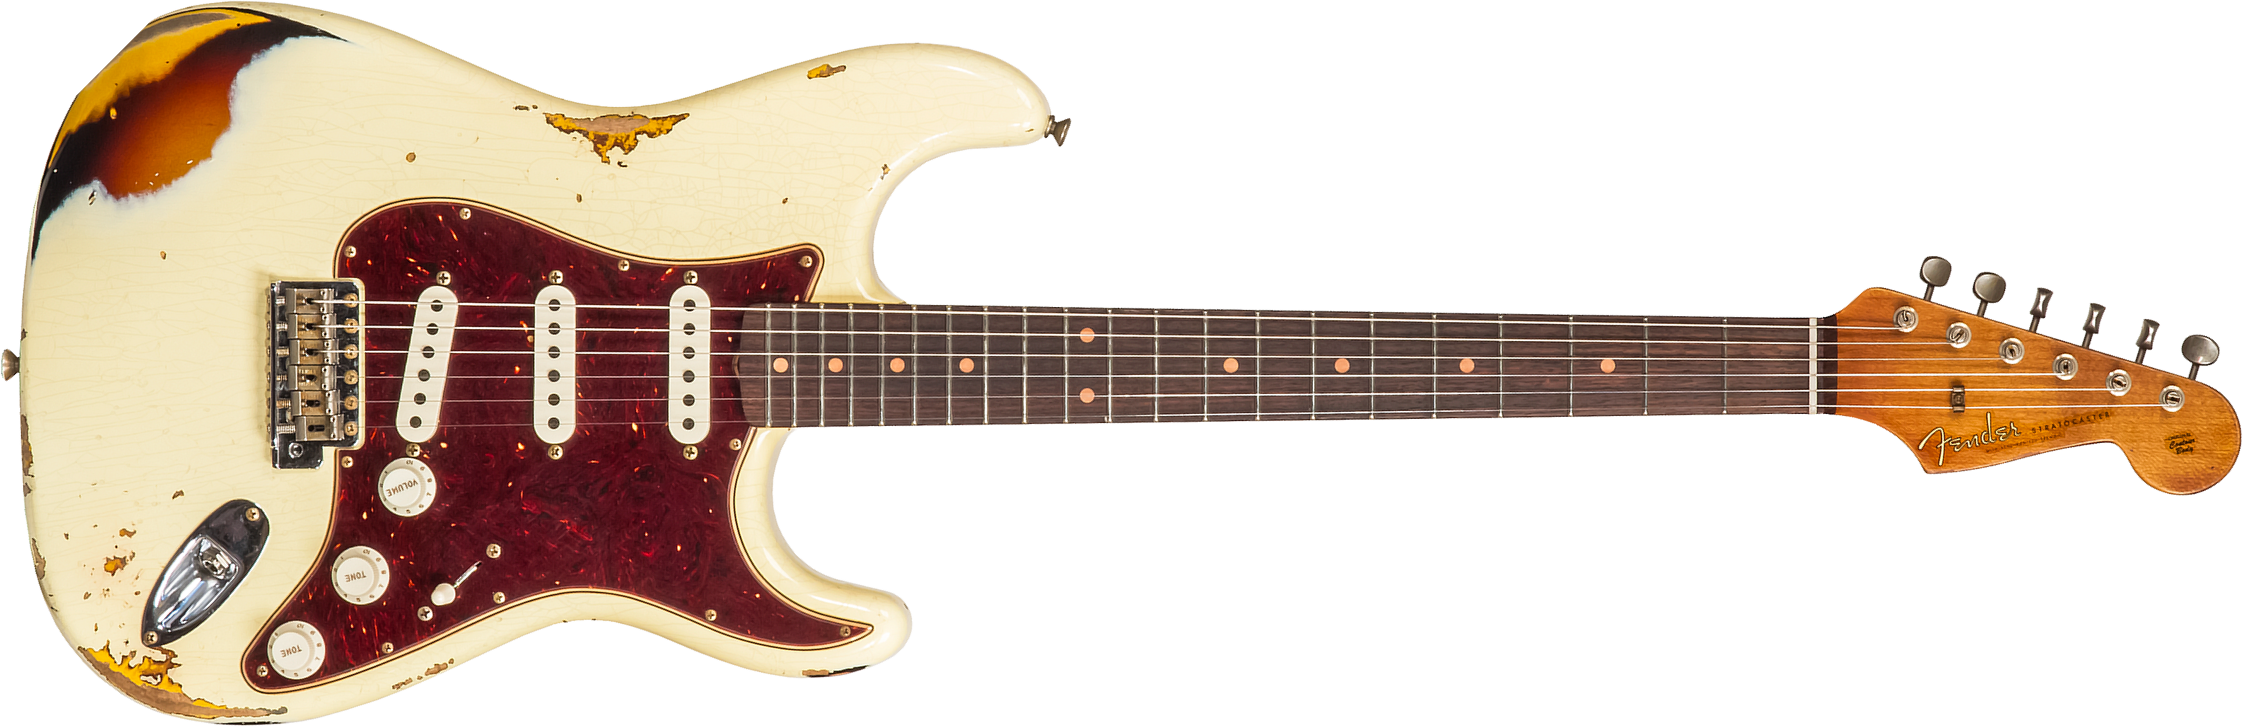 Fender Custom Shop Strat 1961 3s Trem Rw #cz563376 - Heavy Relic Vintage White/3-color Sunburst - E-Gitarre in Str-Form - Main picture